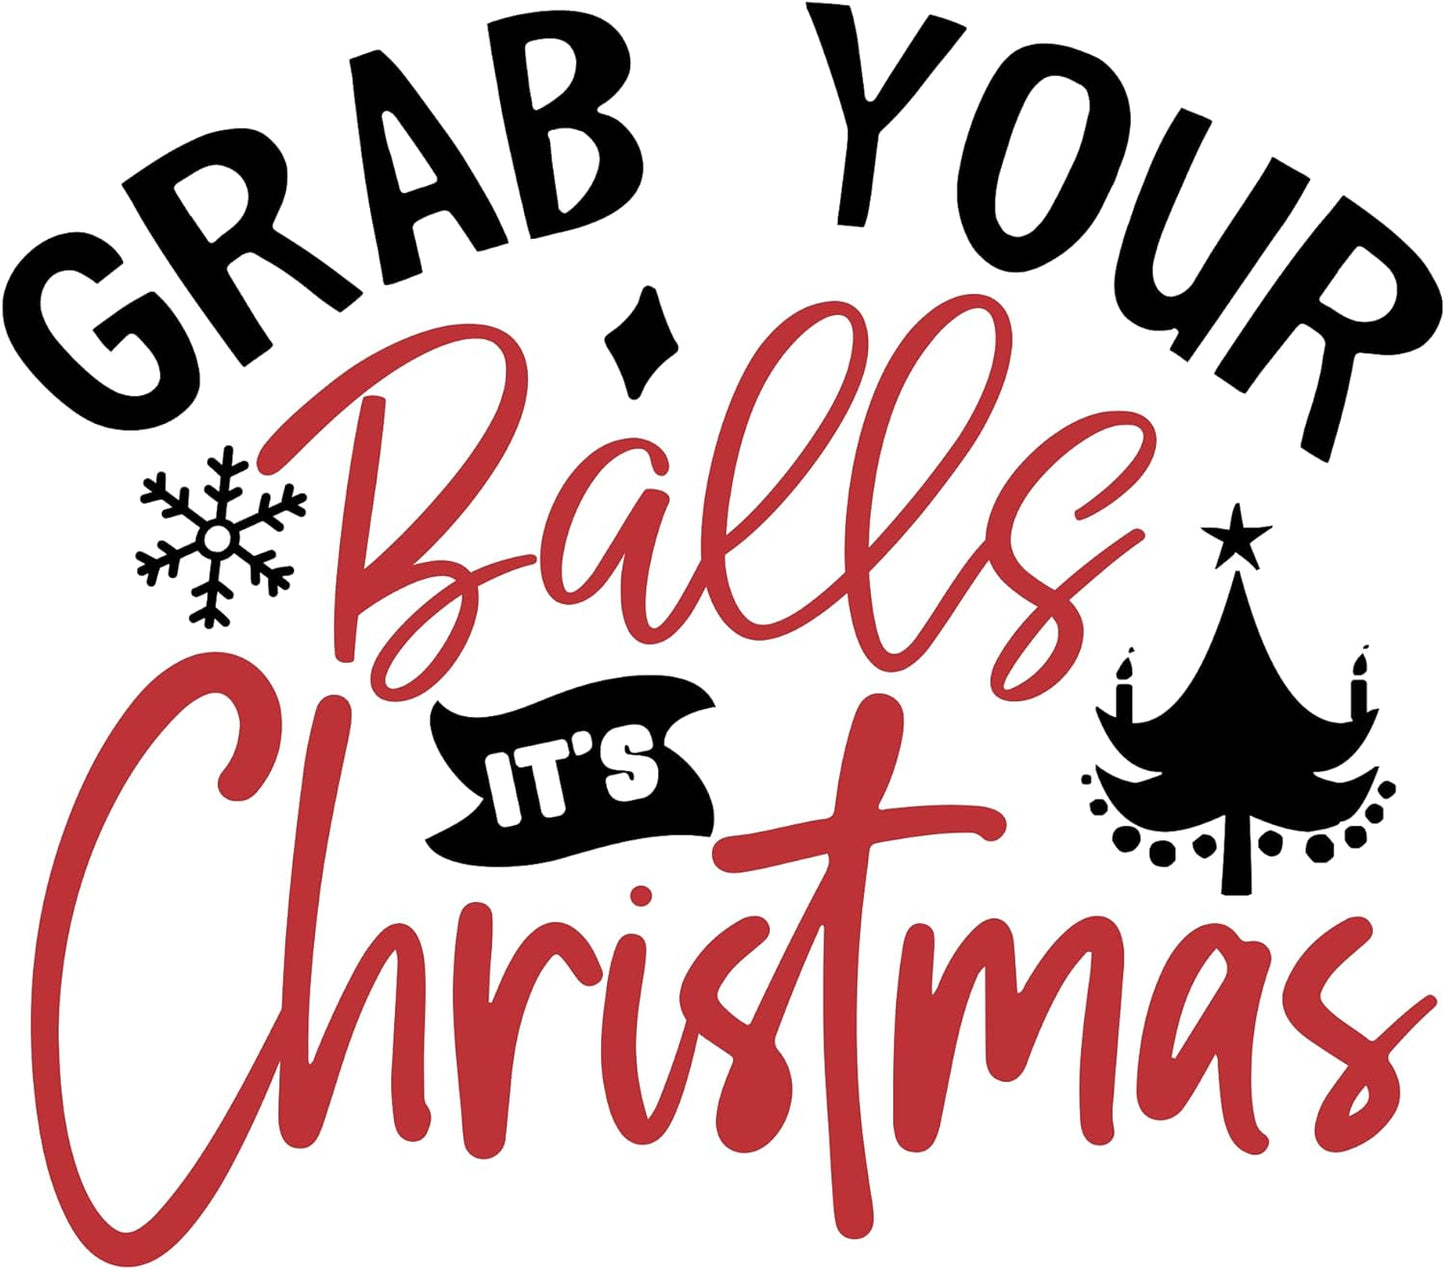 Inspirational Quote Grab Your Balls It's Christmas Motivational Sticker Vinyl Decal Motivation Stickers- 5" Vinyl Sticker Waterproof